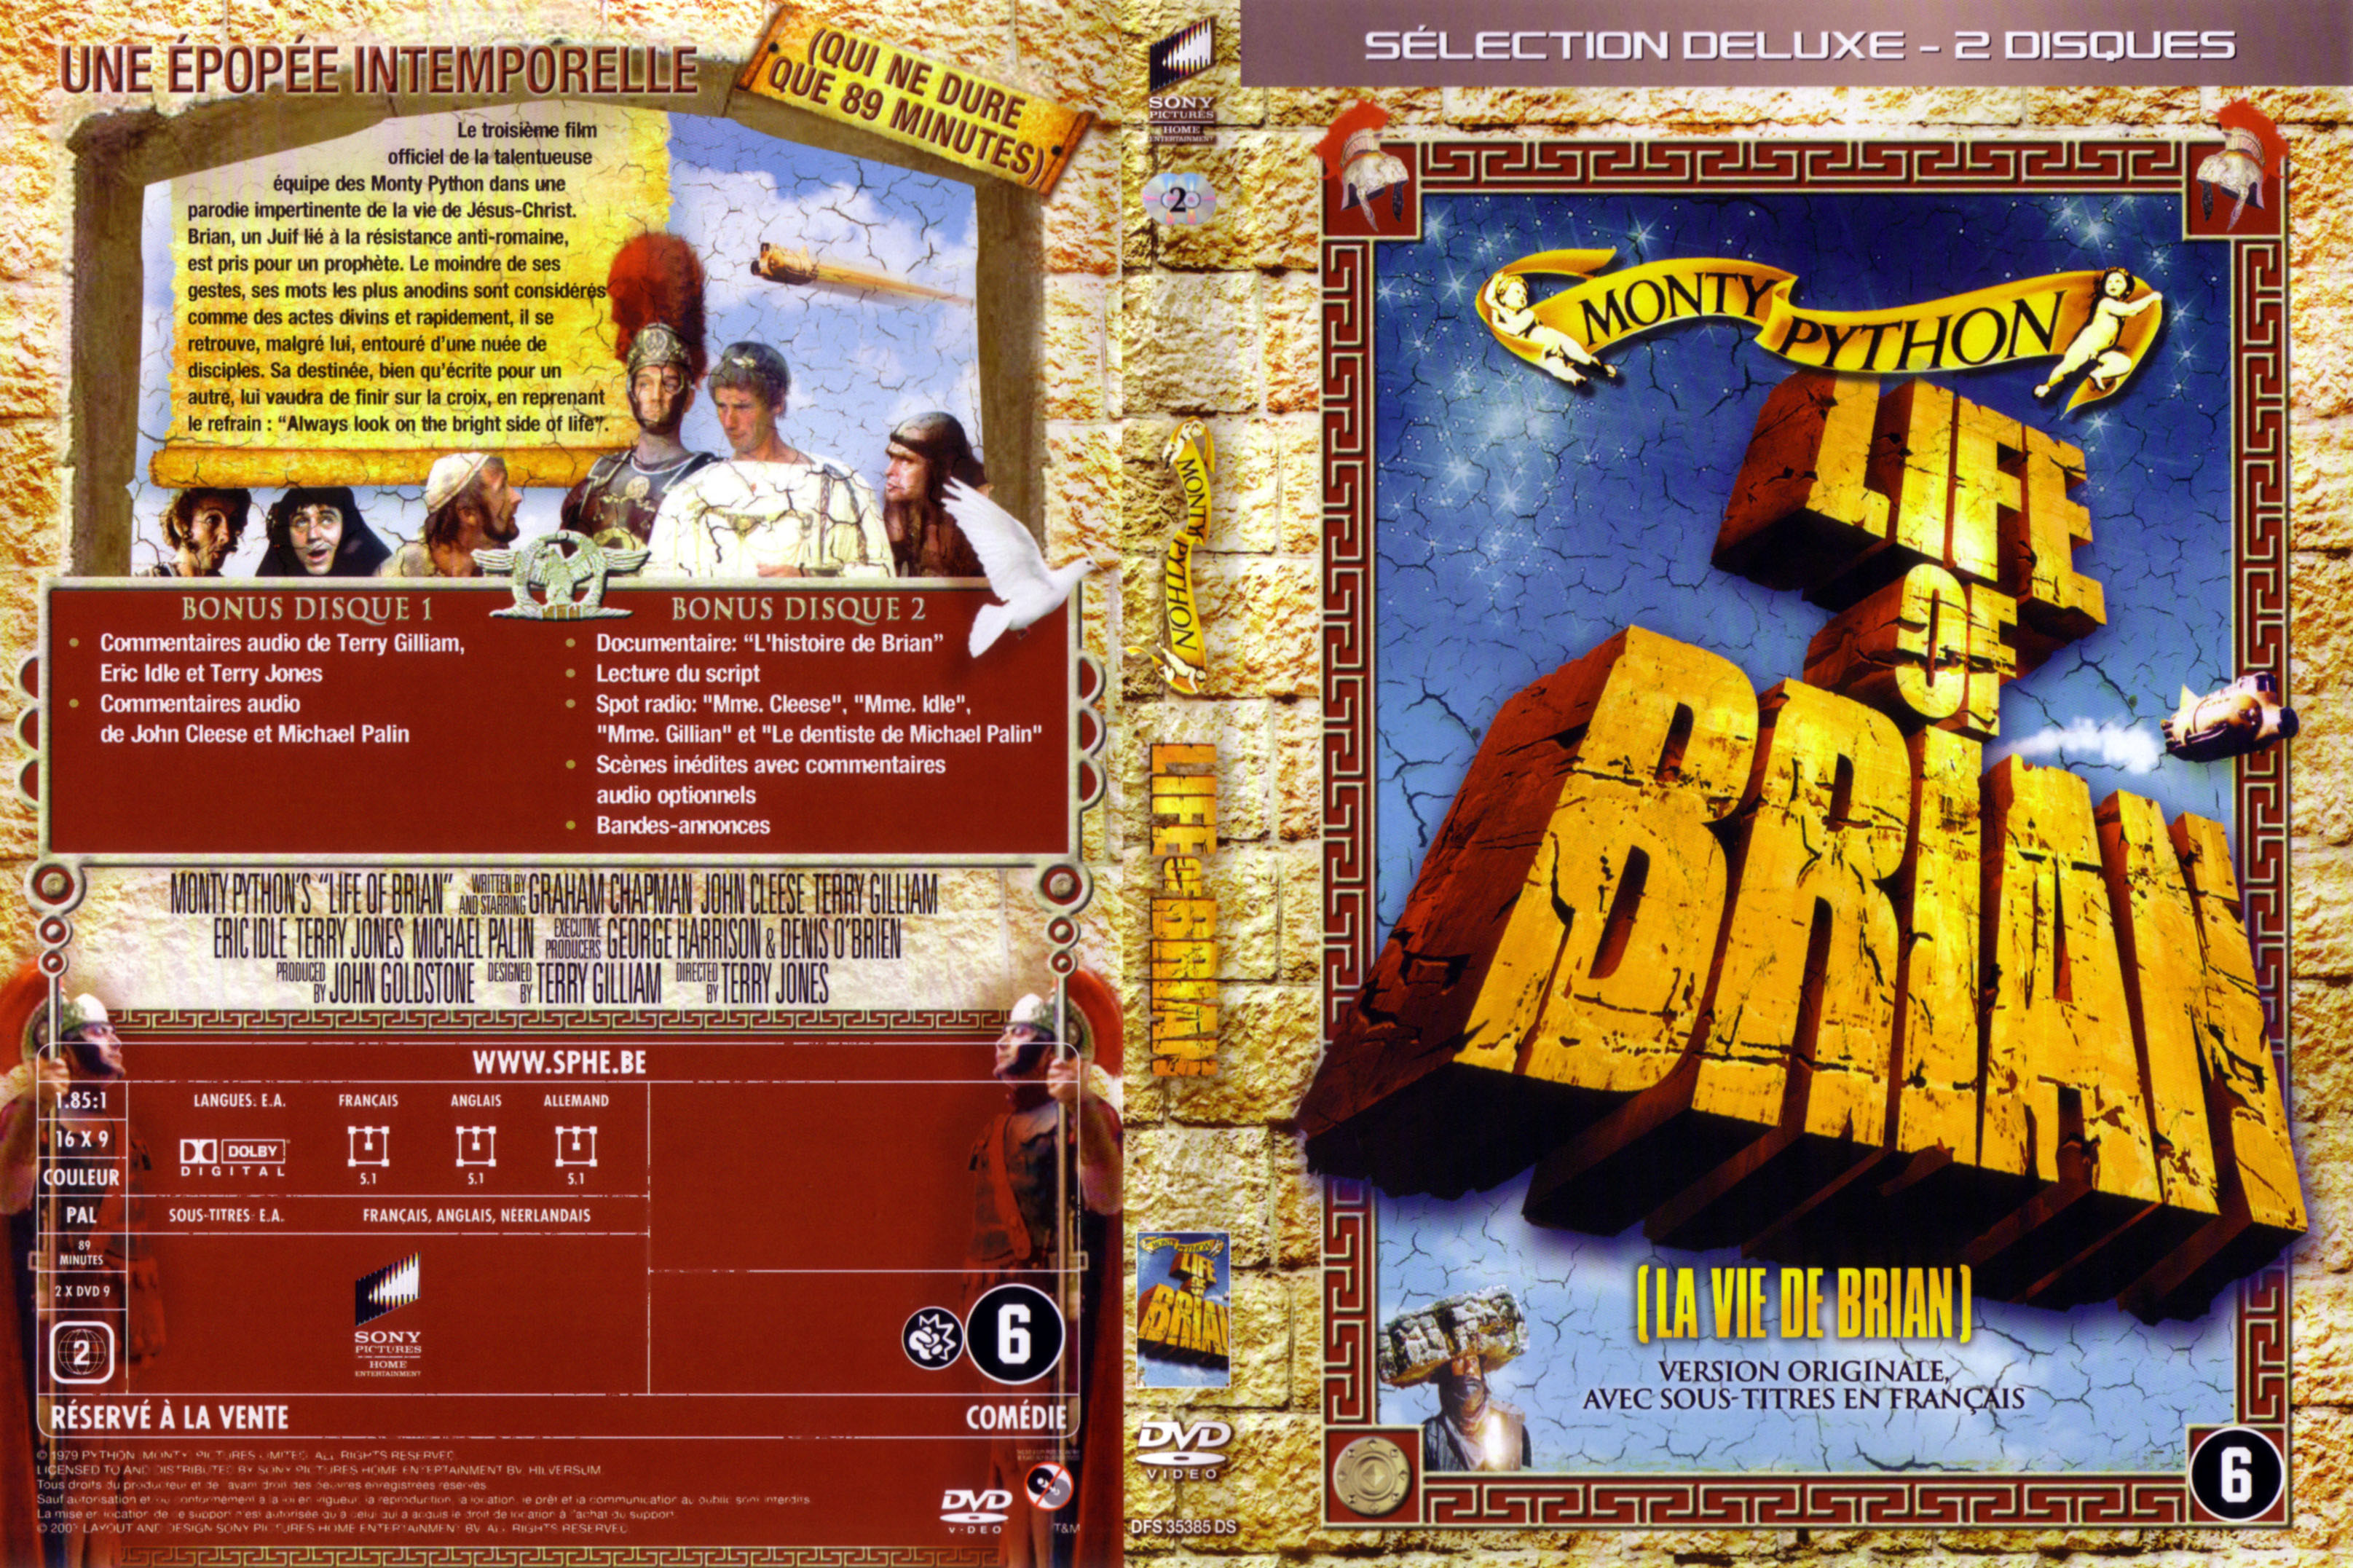 Jaquette DVD La vie de Brian v2